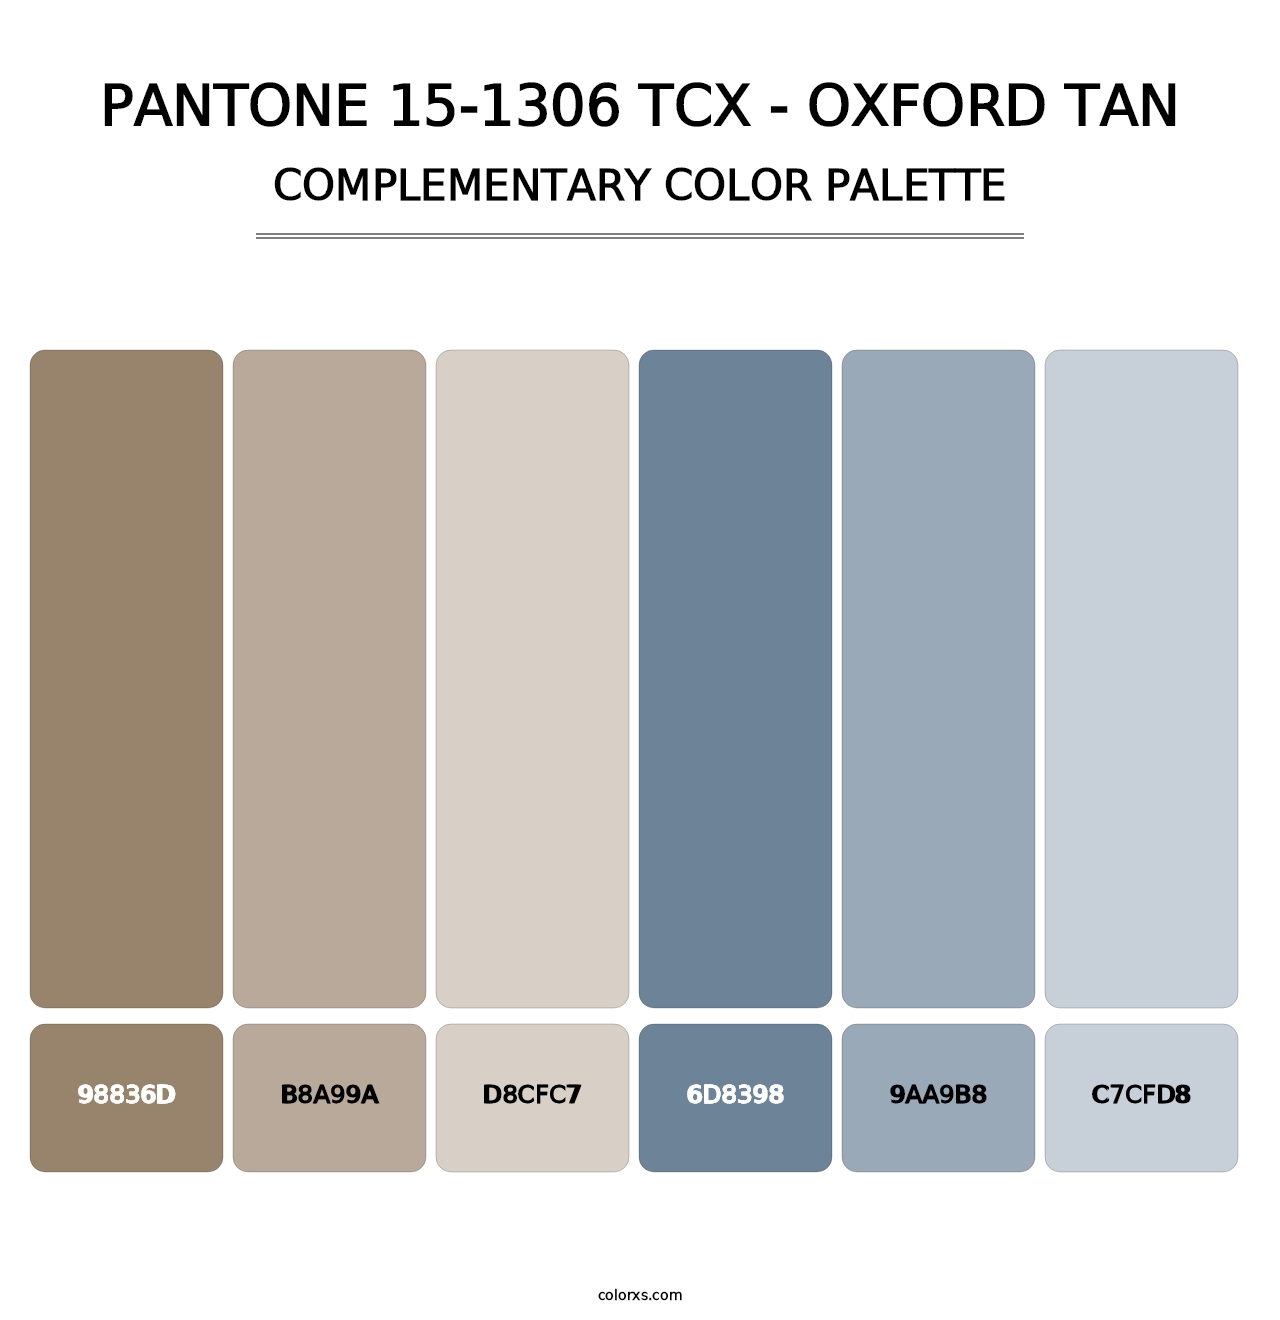 PANTONE 15-1306 TCX - Oxford Tan - Complementary Color Palette